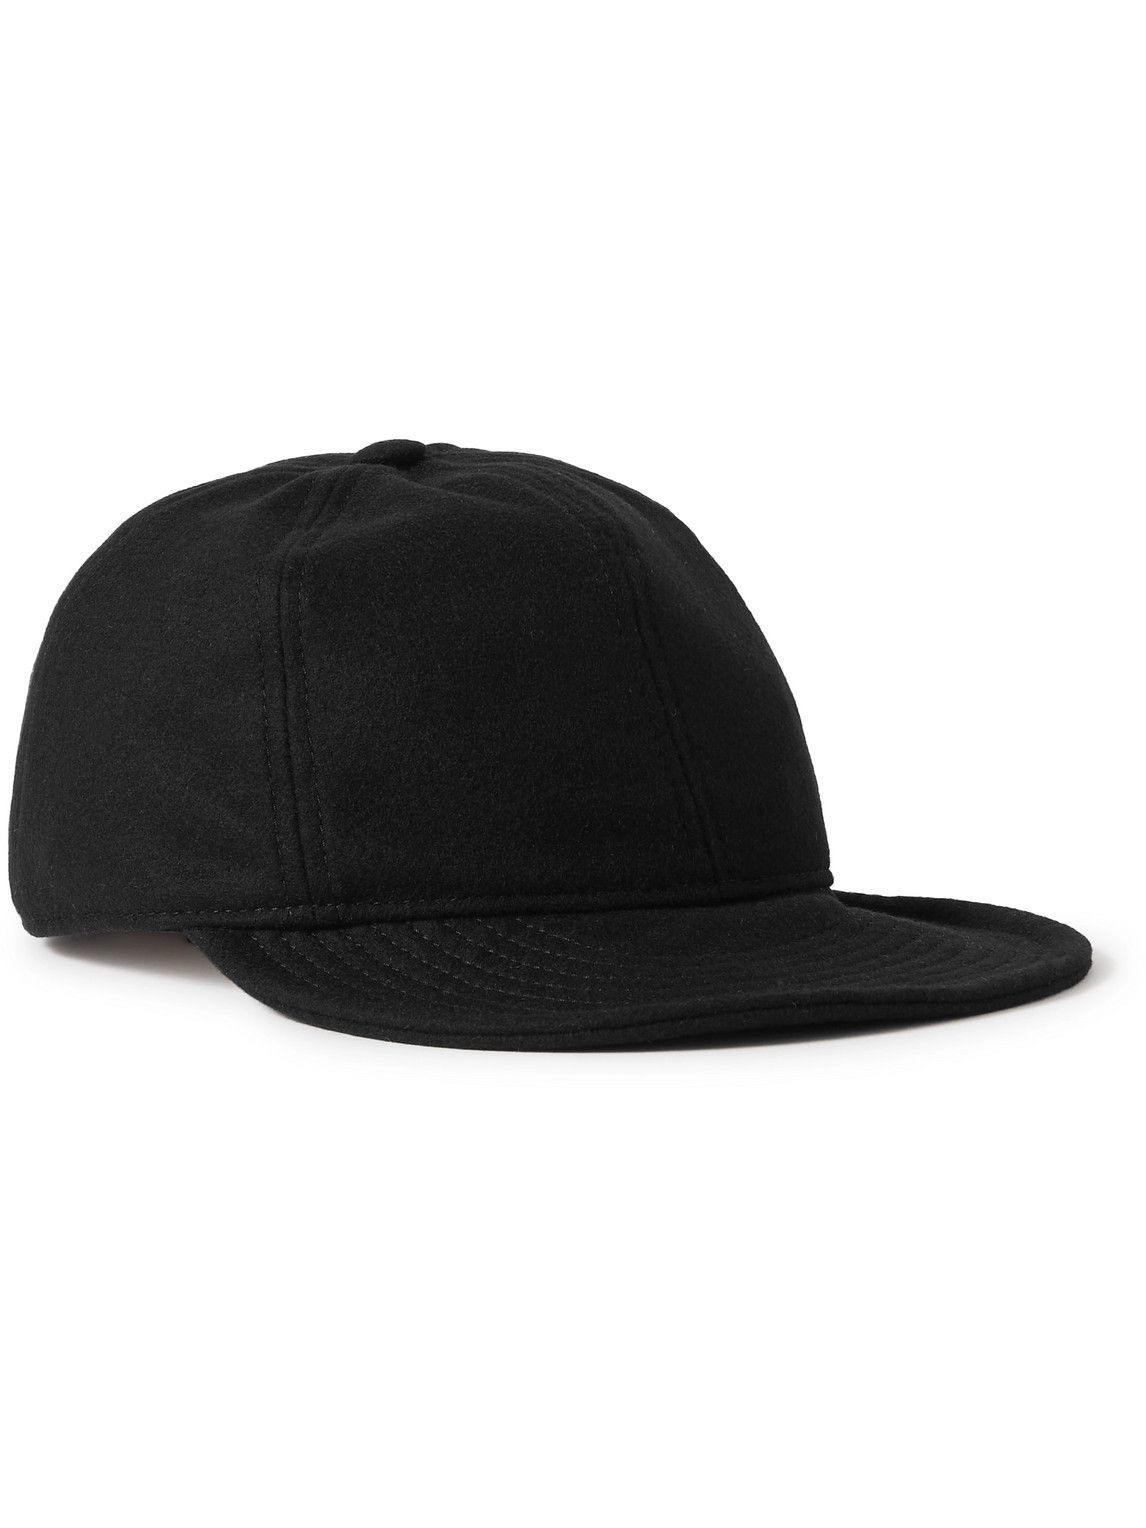 Borsalino - Rock Cashmere Baseball Cap - Black Borsalino